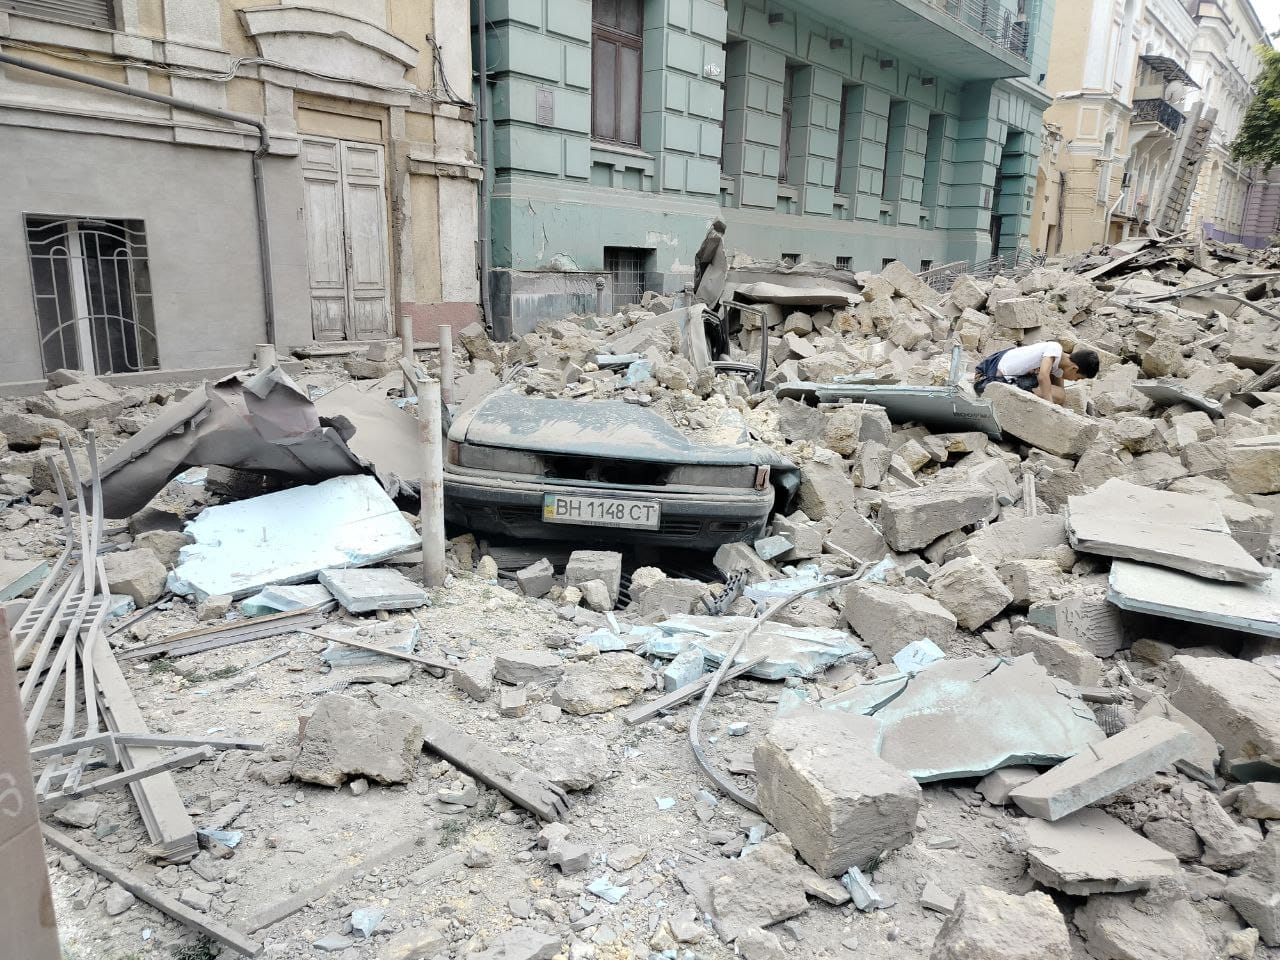 A car buried in rubble amidst a scene of urban destruction.